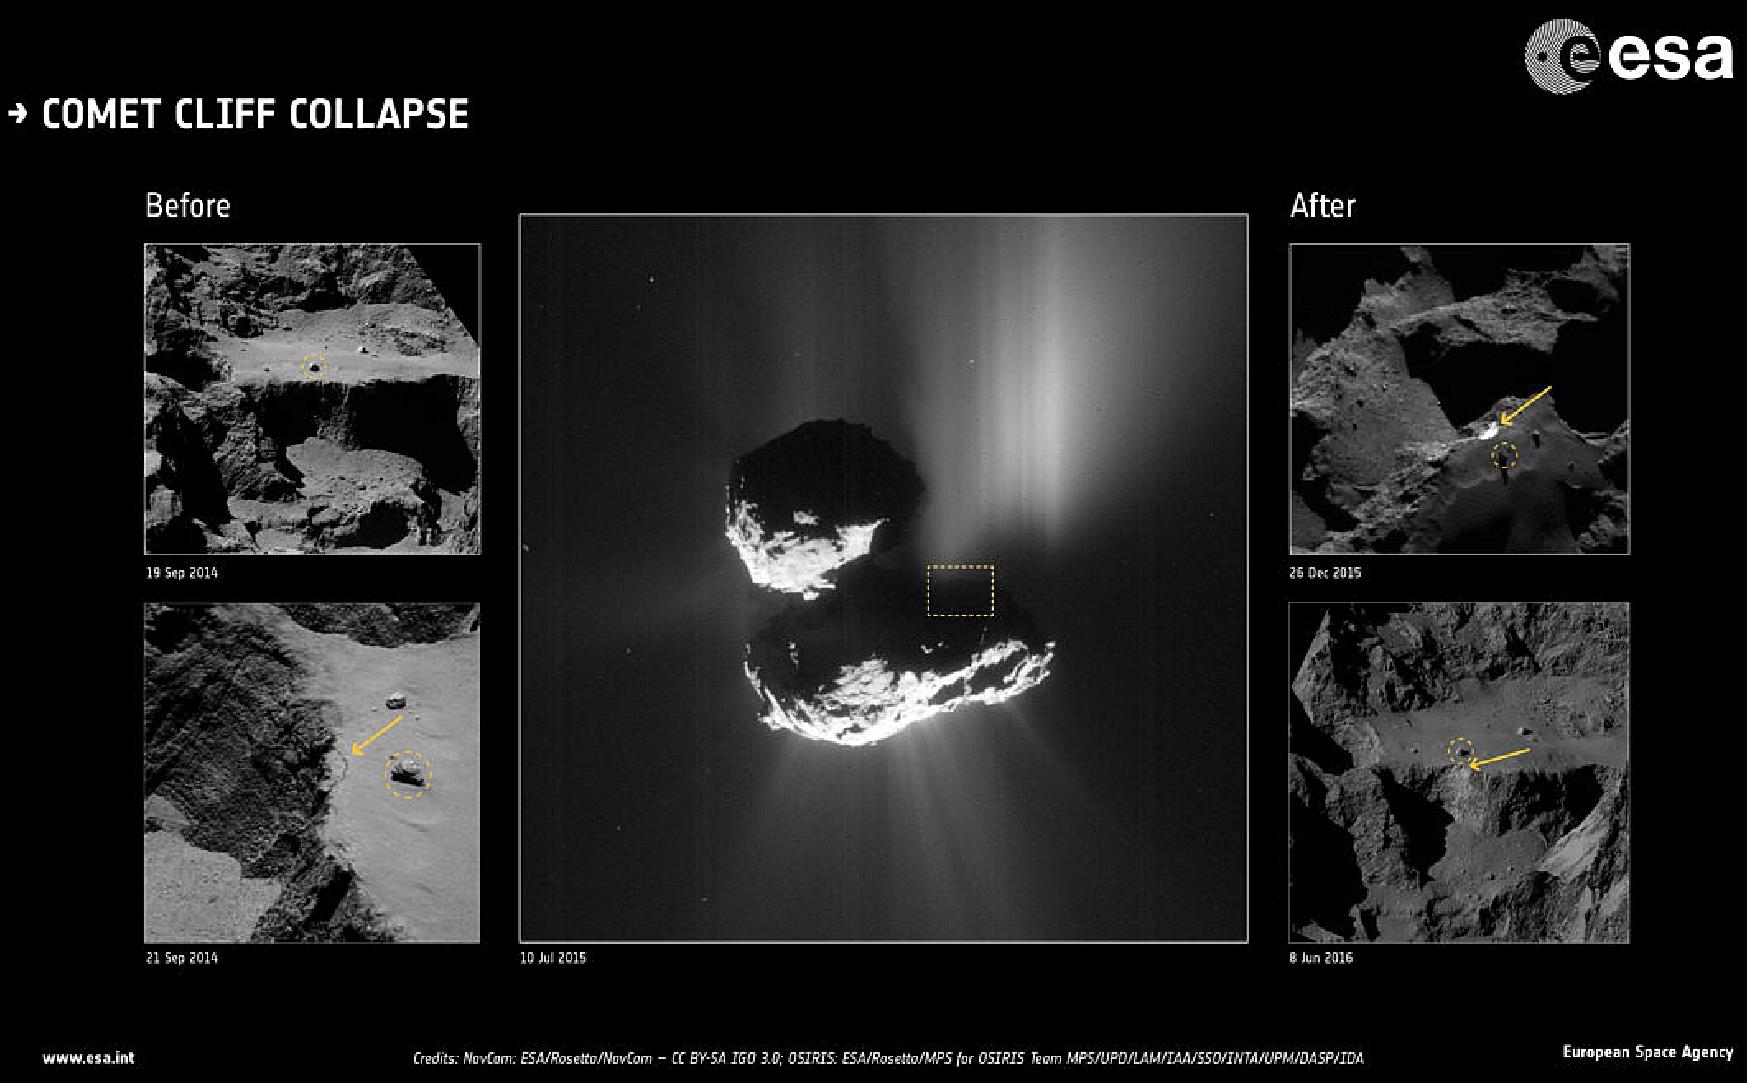 Figure 84: Comet cliff collapse: before and after (image credit: ESA/Rosetta/NavCam – CC BY-SA IGO 3.0; ESA/Rosetta/MPS for OSIRIS Team MPS/UPD/LAM/IAA/SSO/INTA/UPM/DASP/IDA